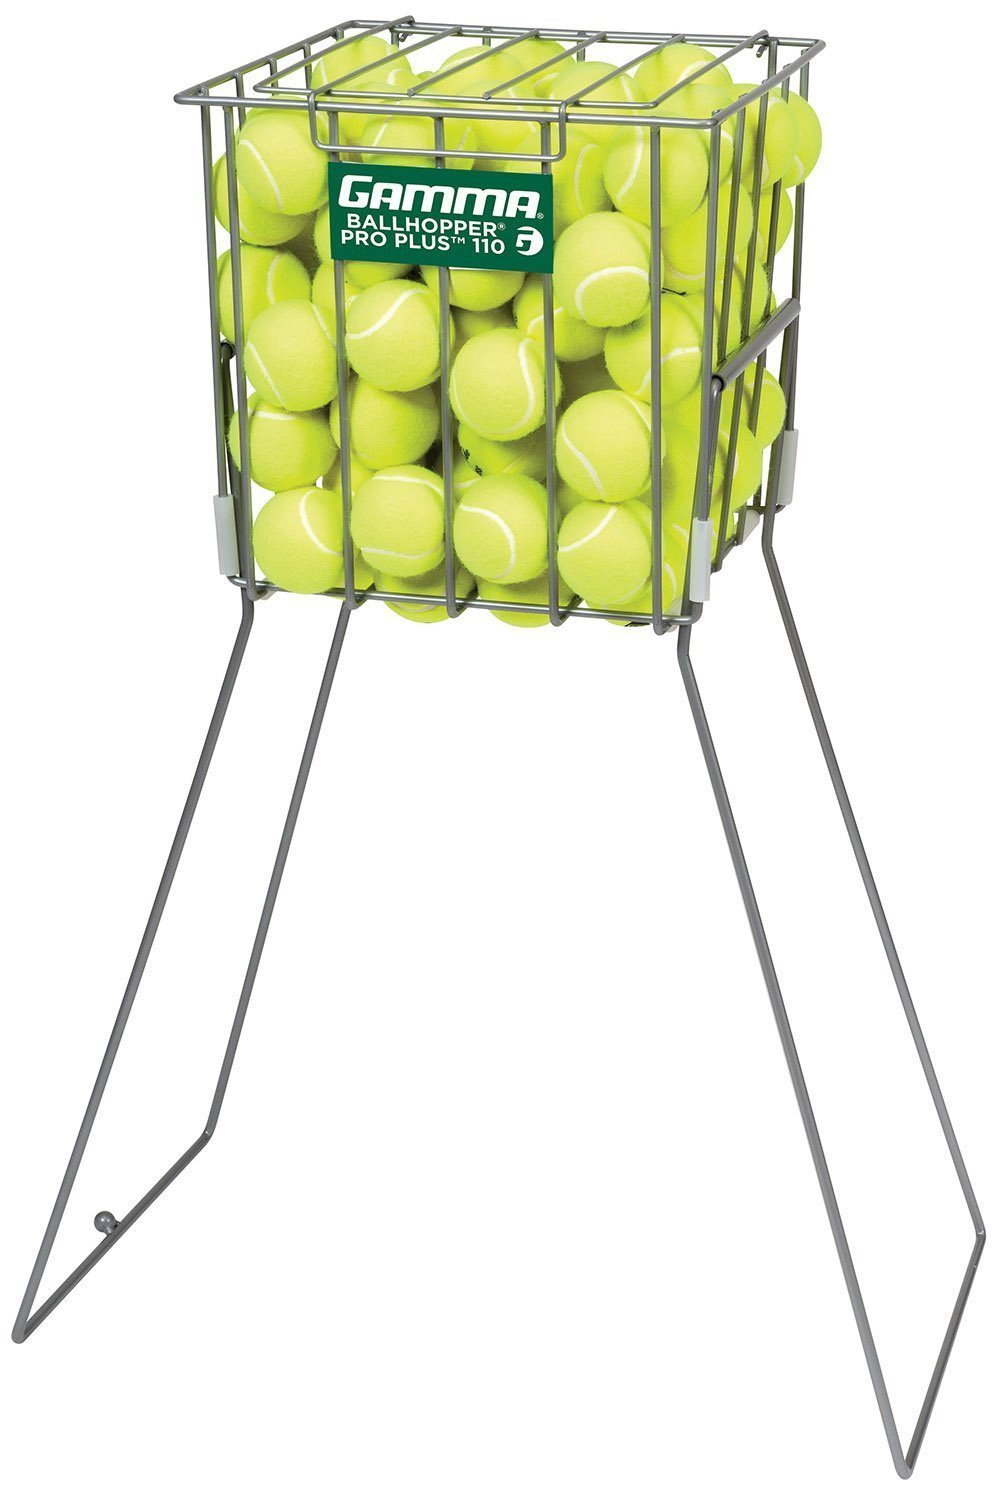 Gamma - Pro Plus 110 Ballhopper-Tennis Accessories-Kunstadt Sports